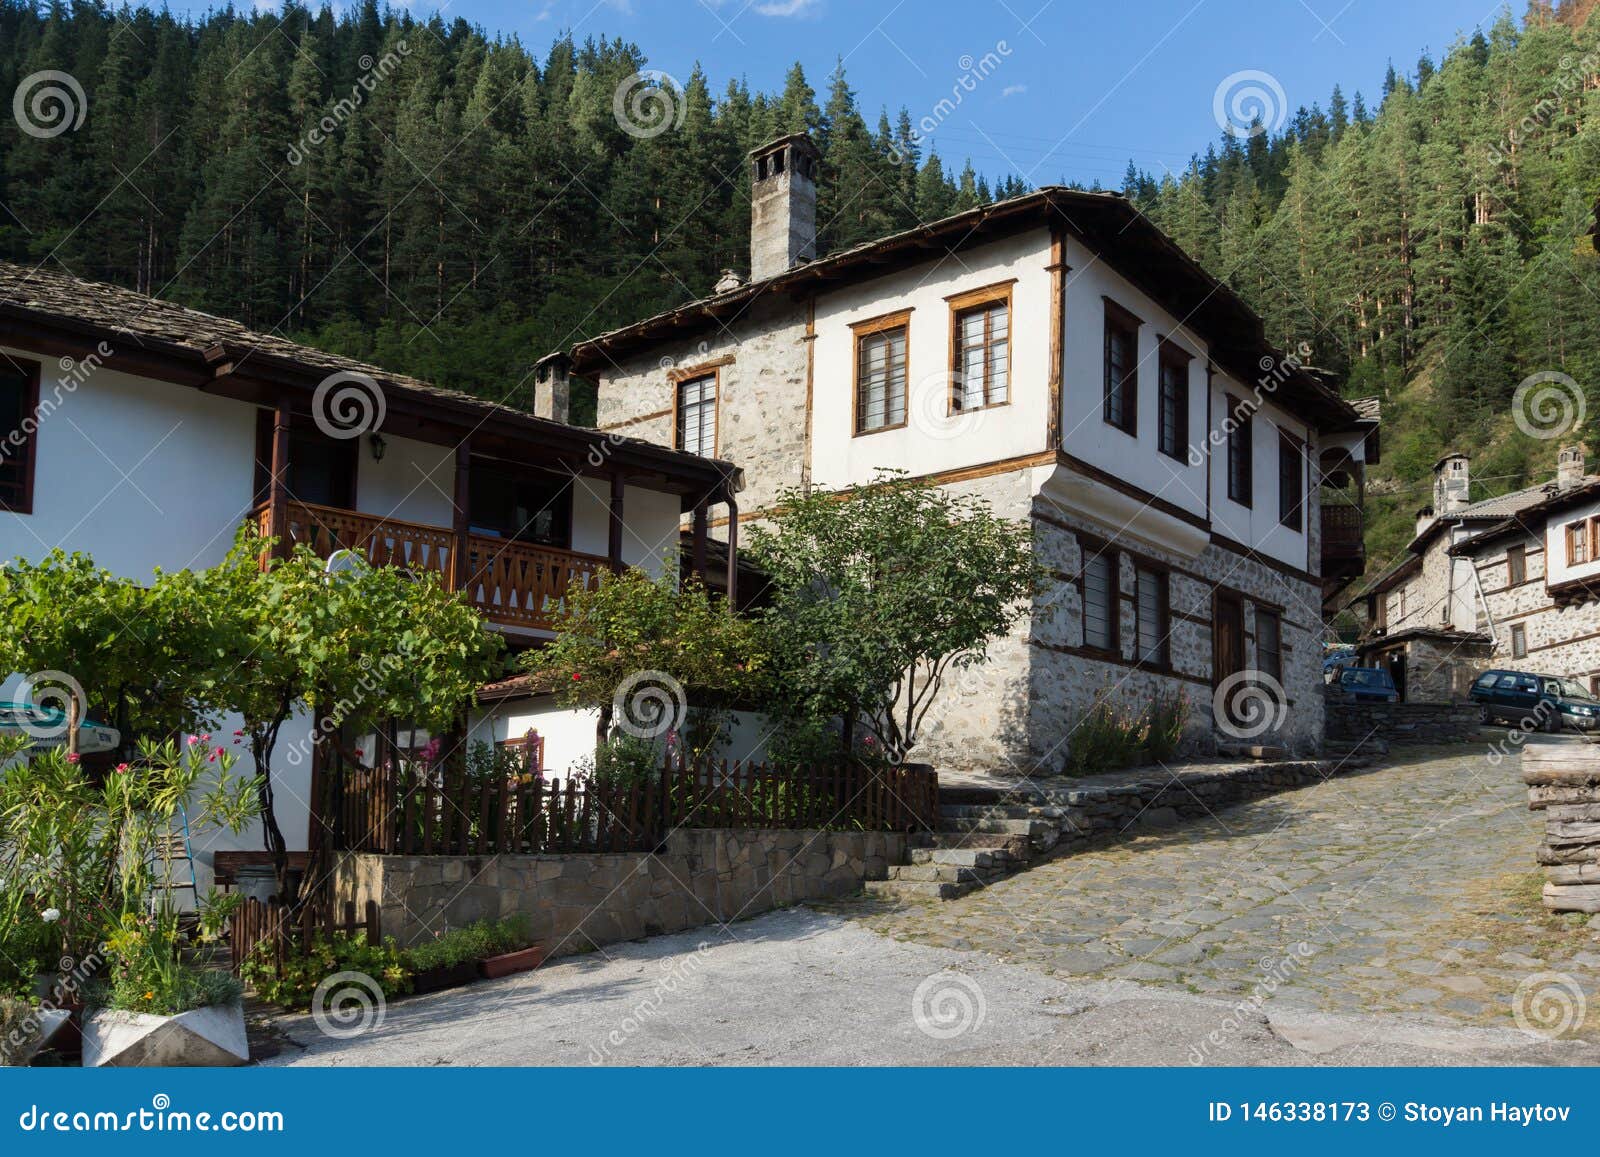 SHIROKA LAKA, BULGARIA - AUGUST 14, 2018: Nineteenth century houses in historical town of Shiroka Laka, Smolyan Region, Bulgaria